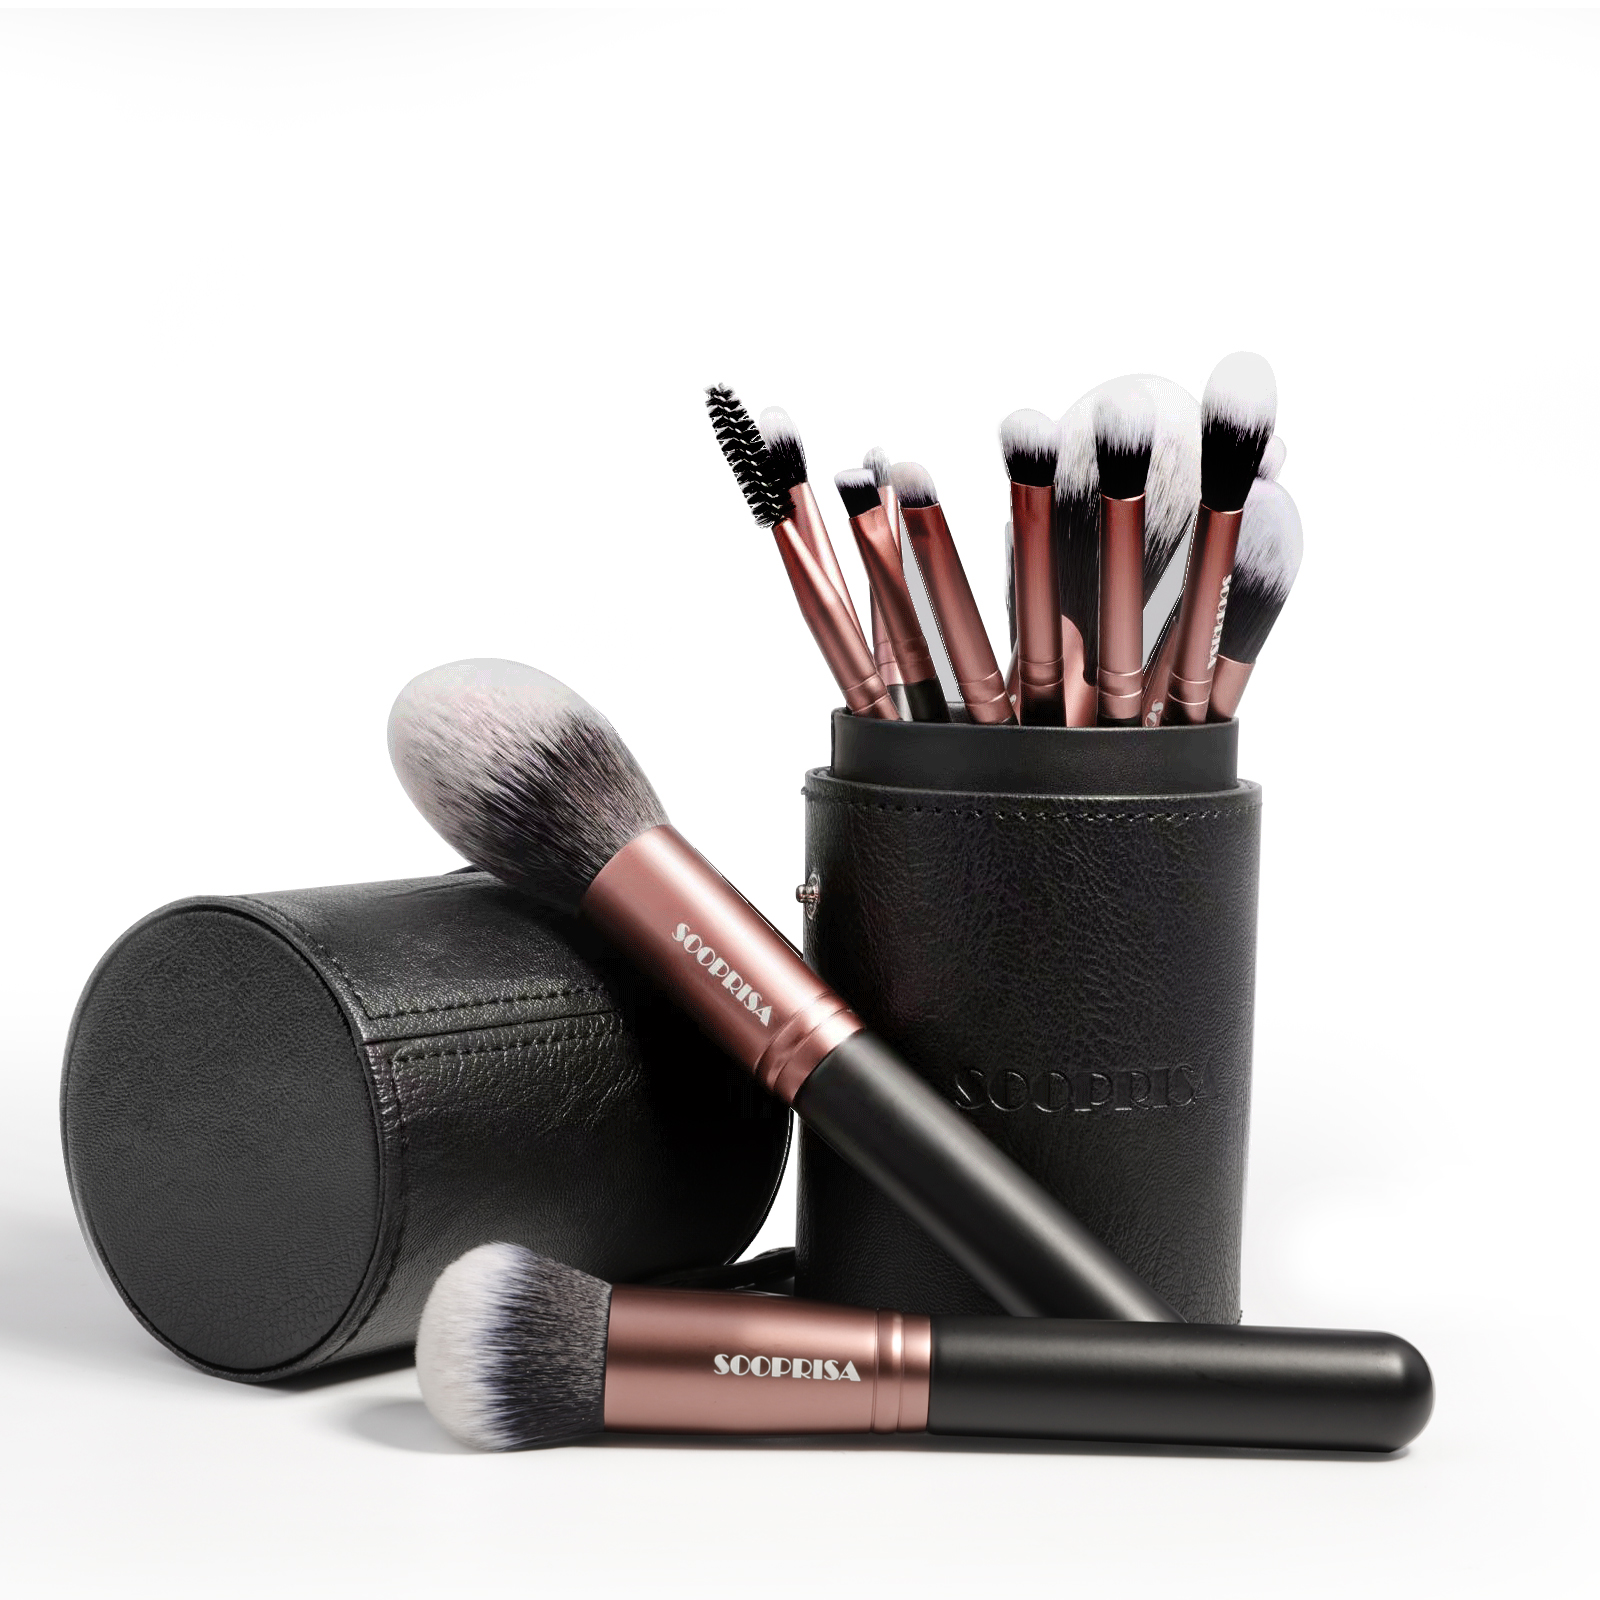 SOOPRISA Make up Brushes 12Pcs Pro Premium Synthetic Fan Powder Eyeshadow Set with Makeup Holder